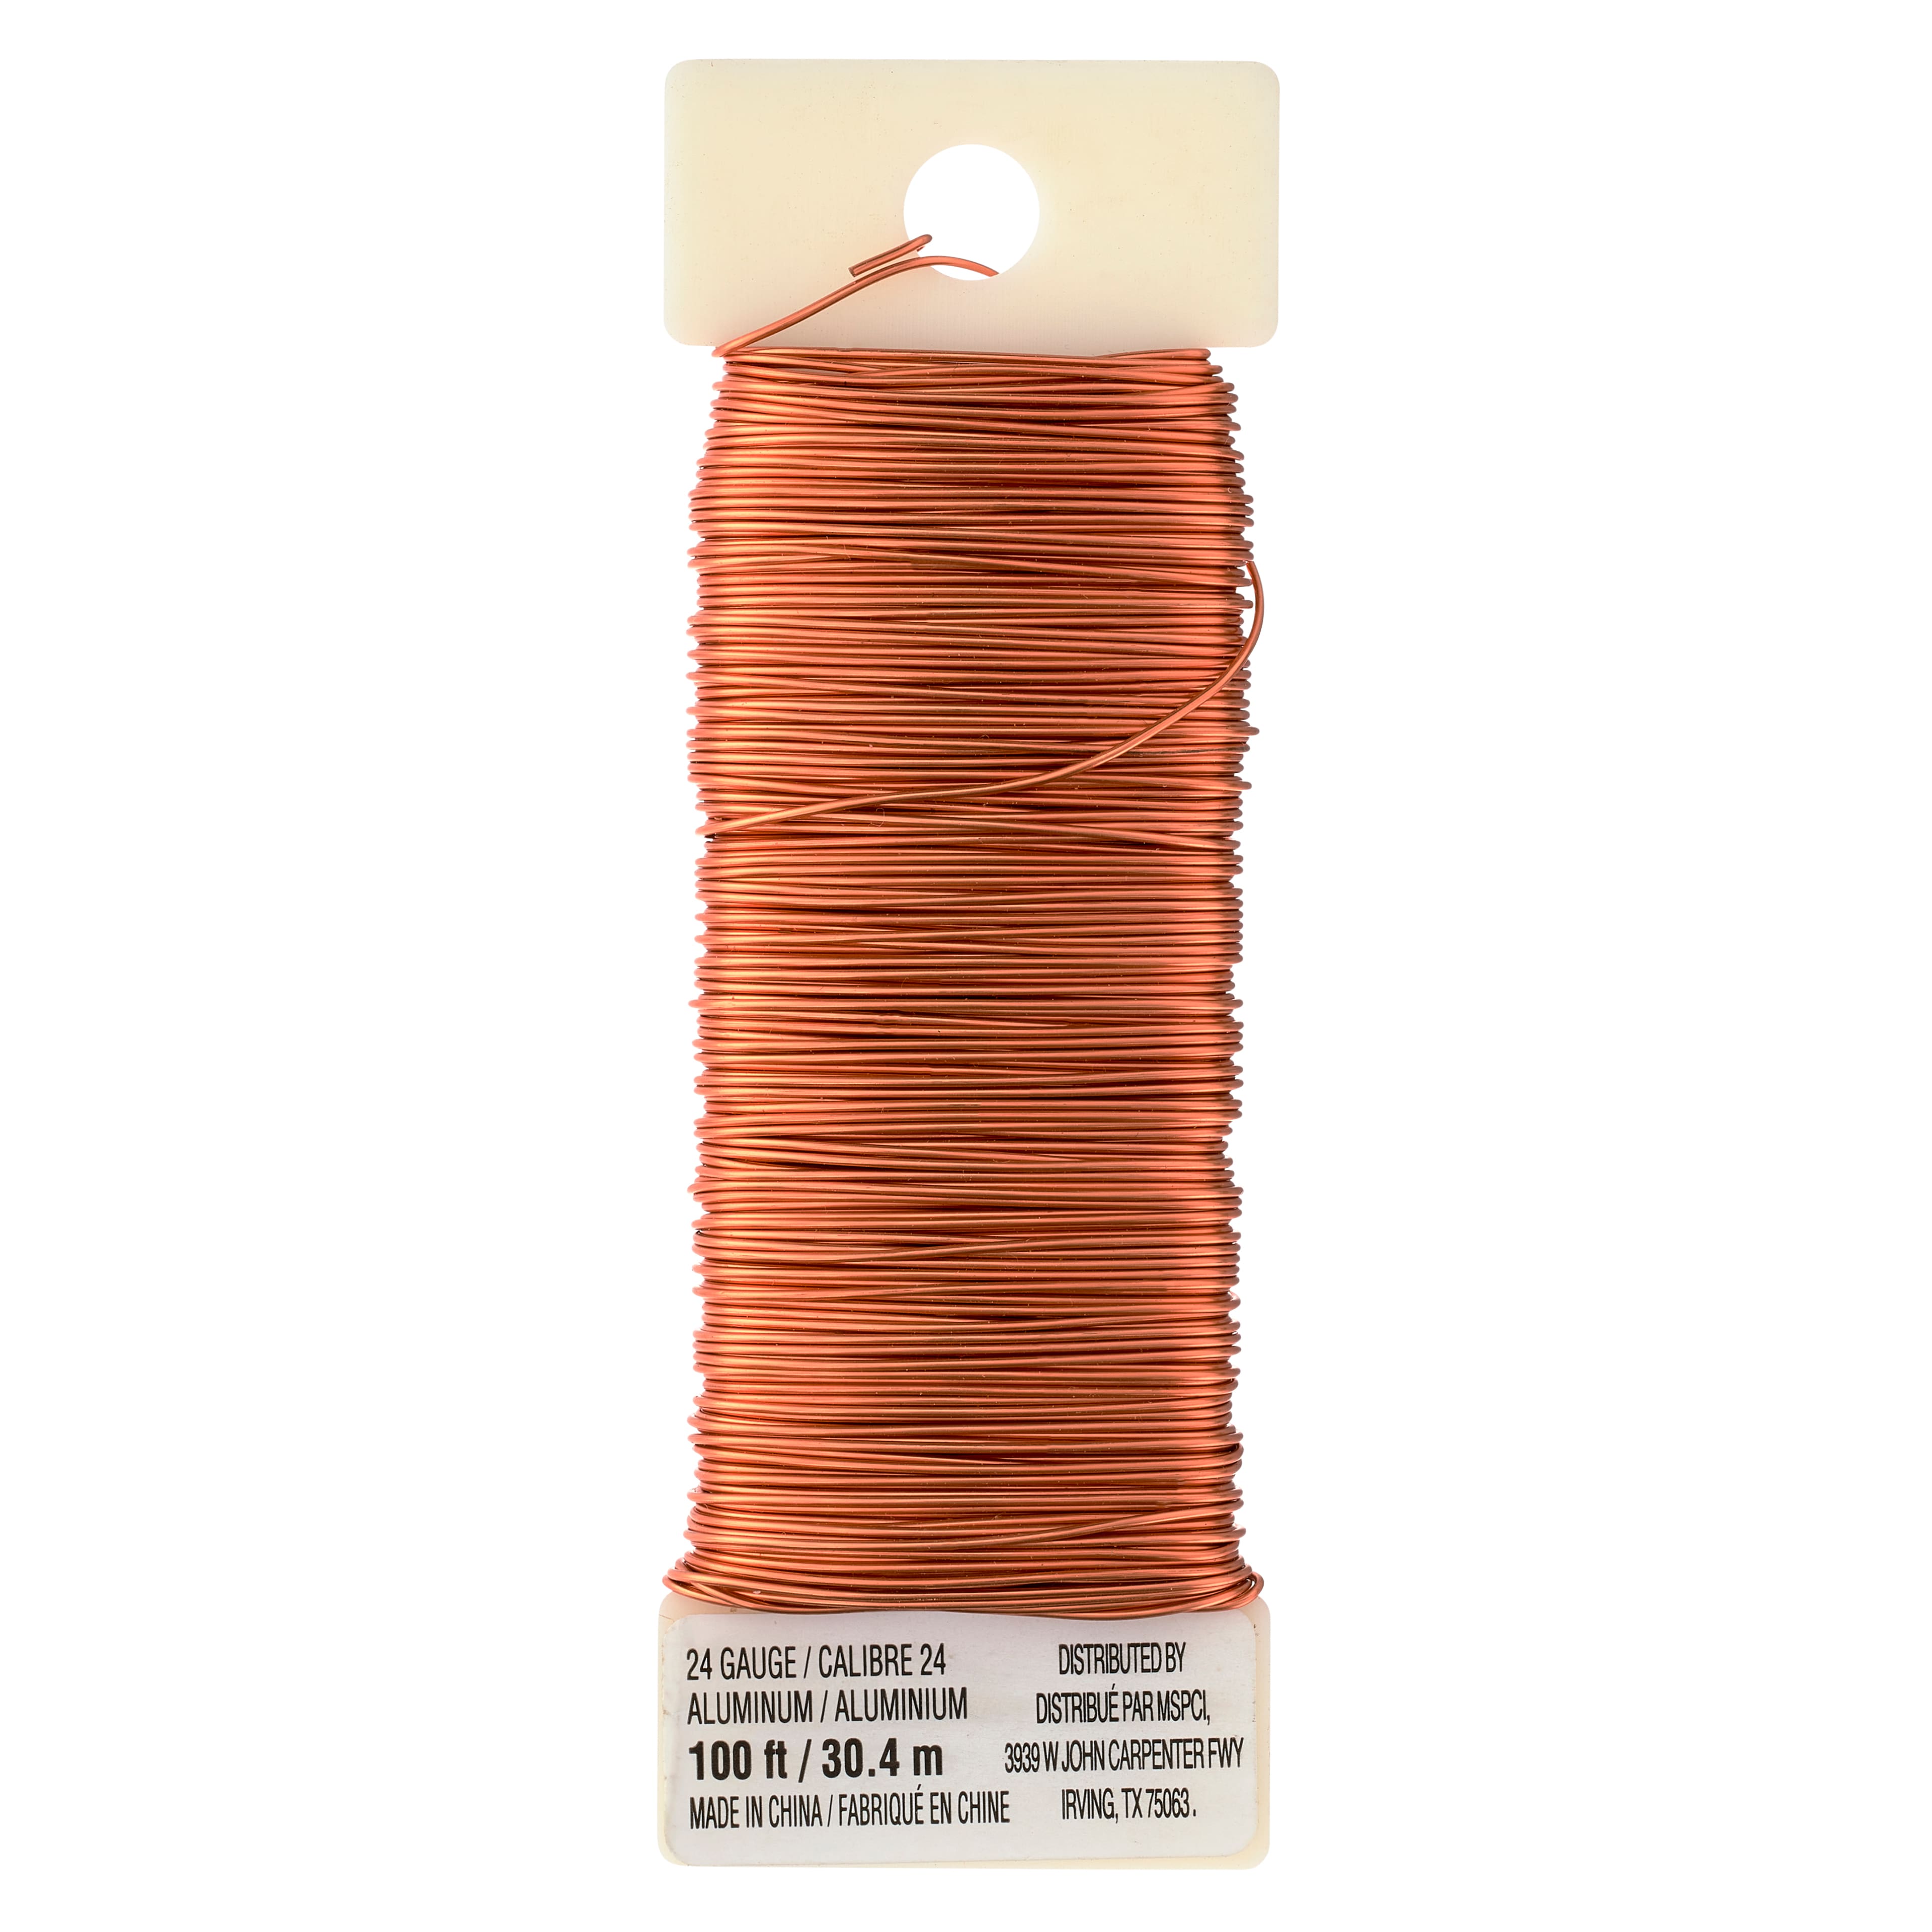 24 Gauge Copper Wire By Ashland™